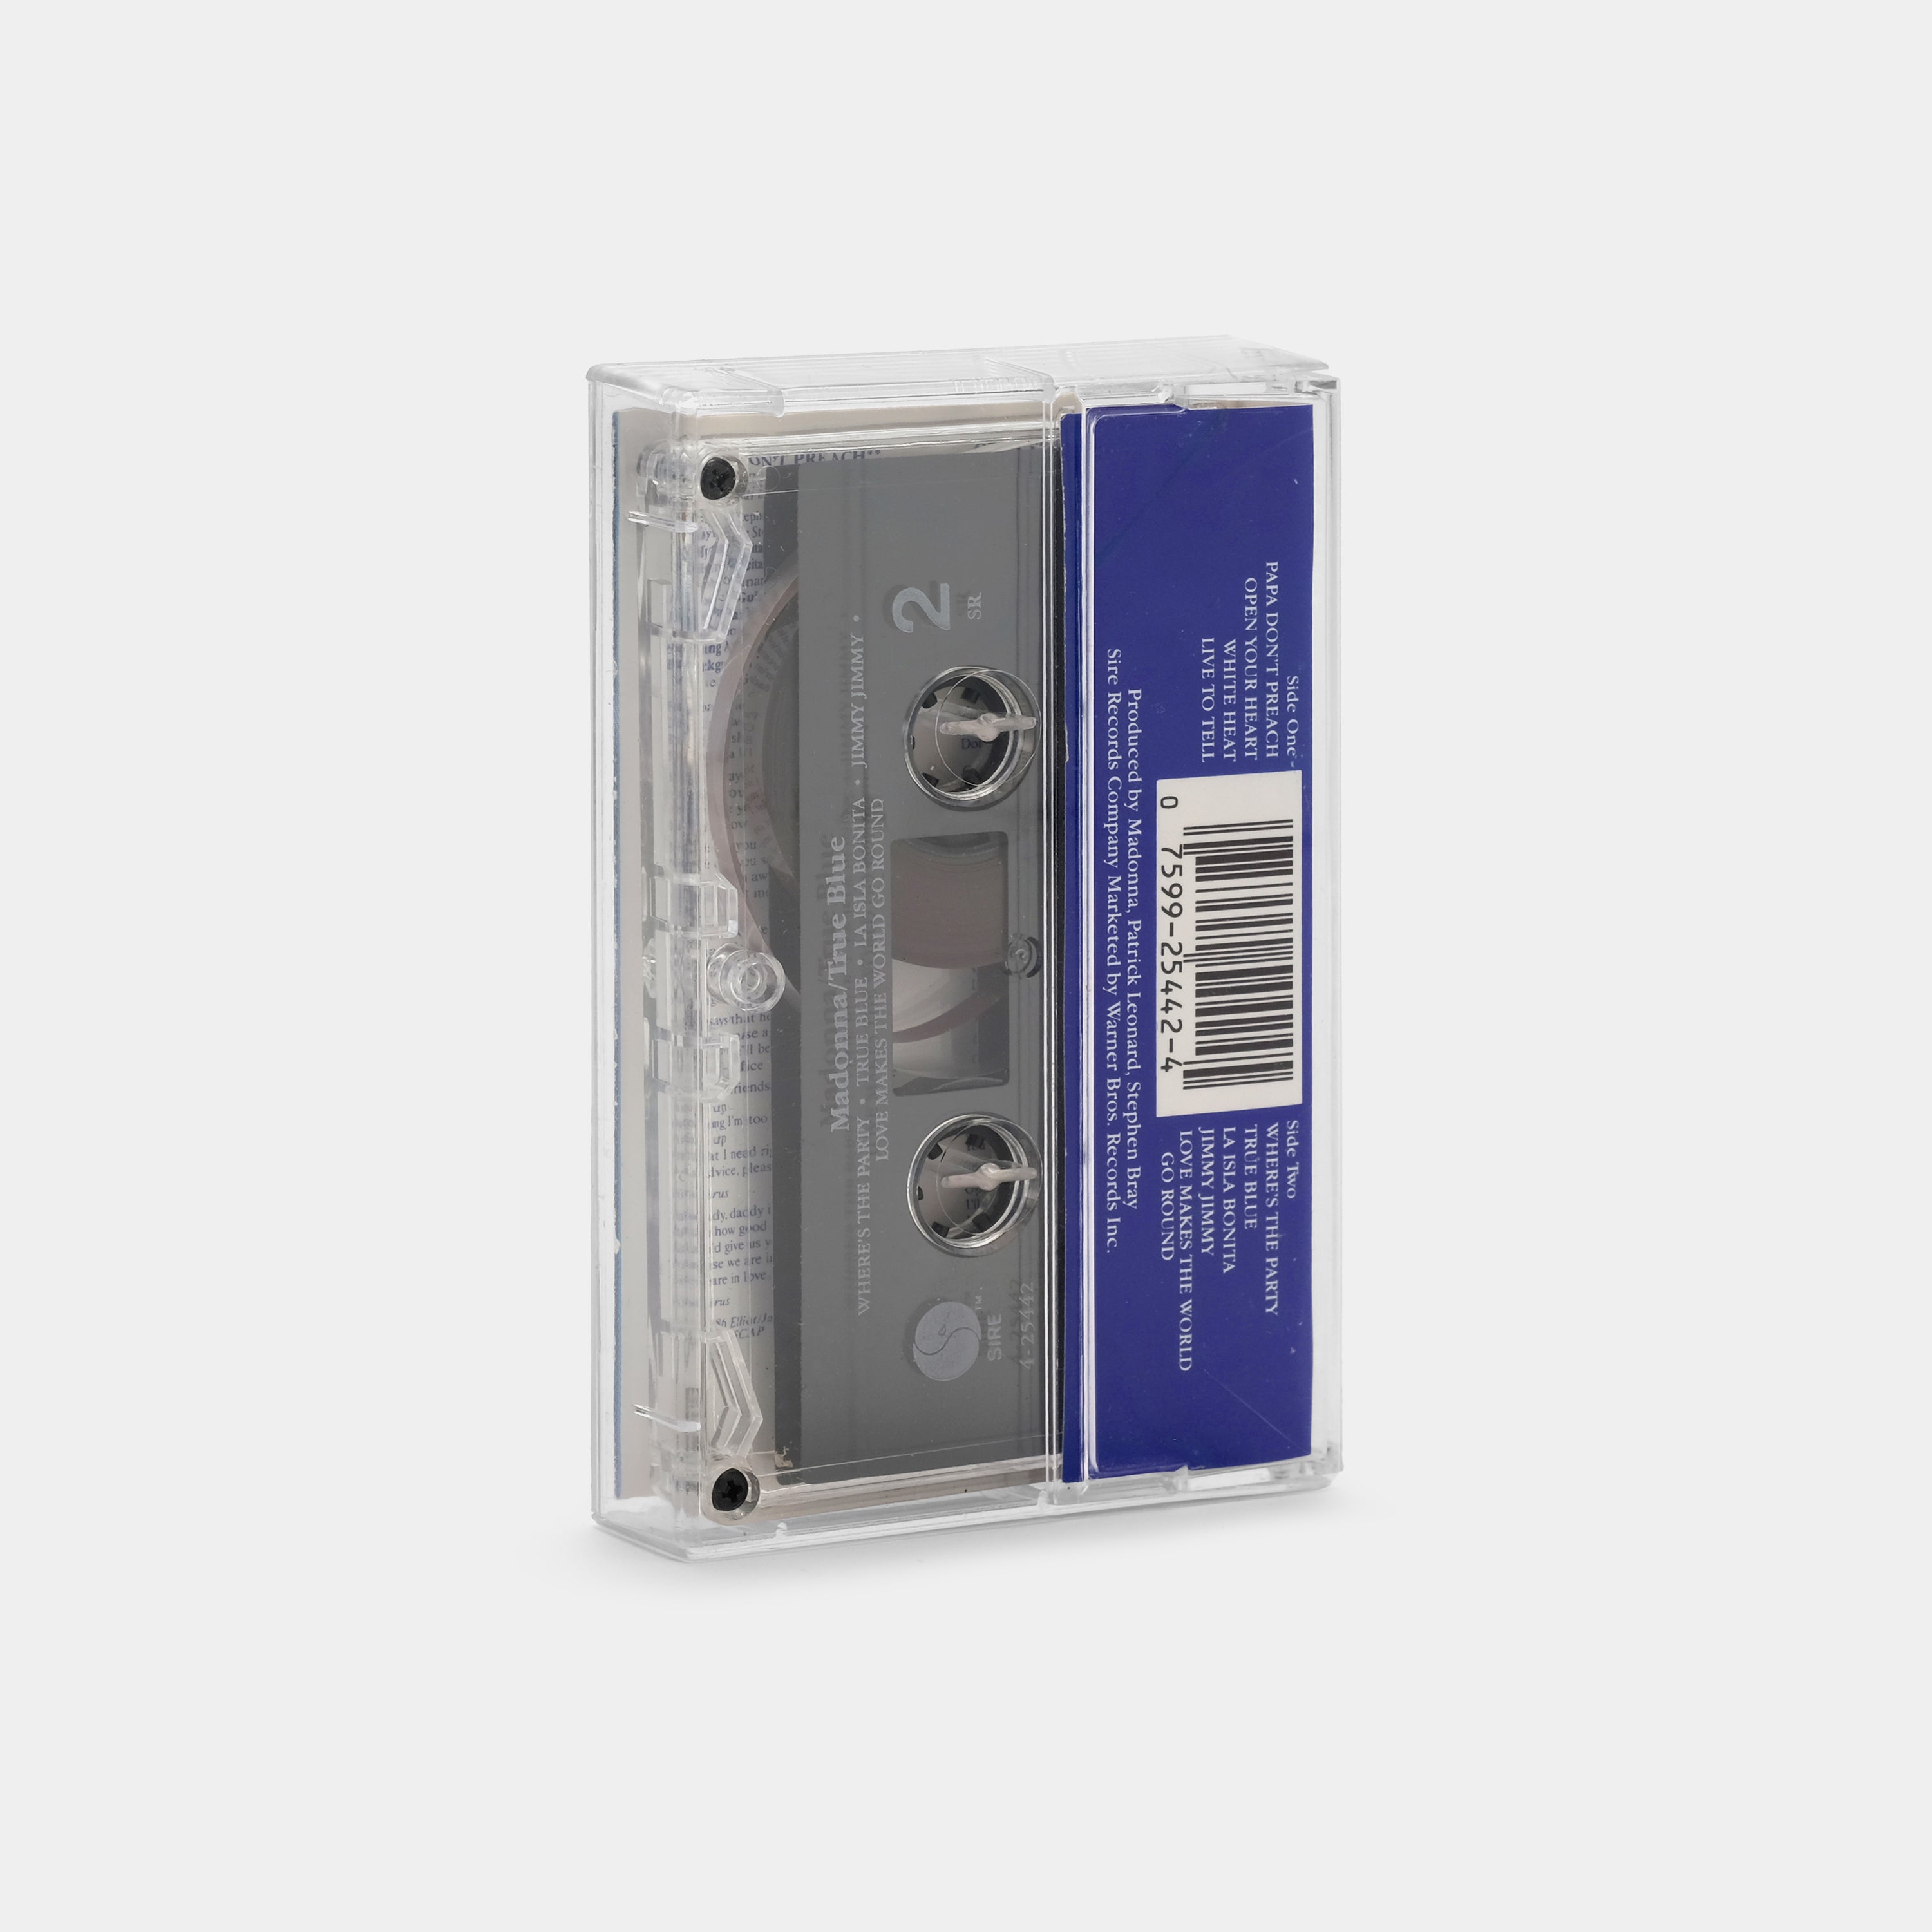 Madonna - True Blue Cassette Tape